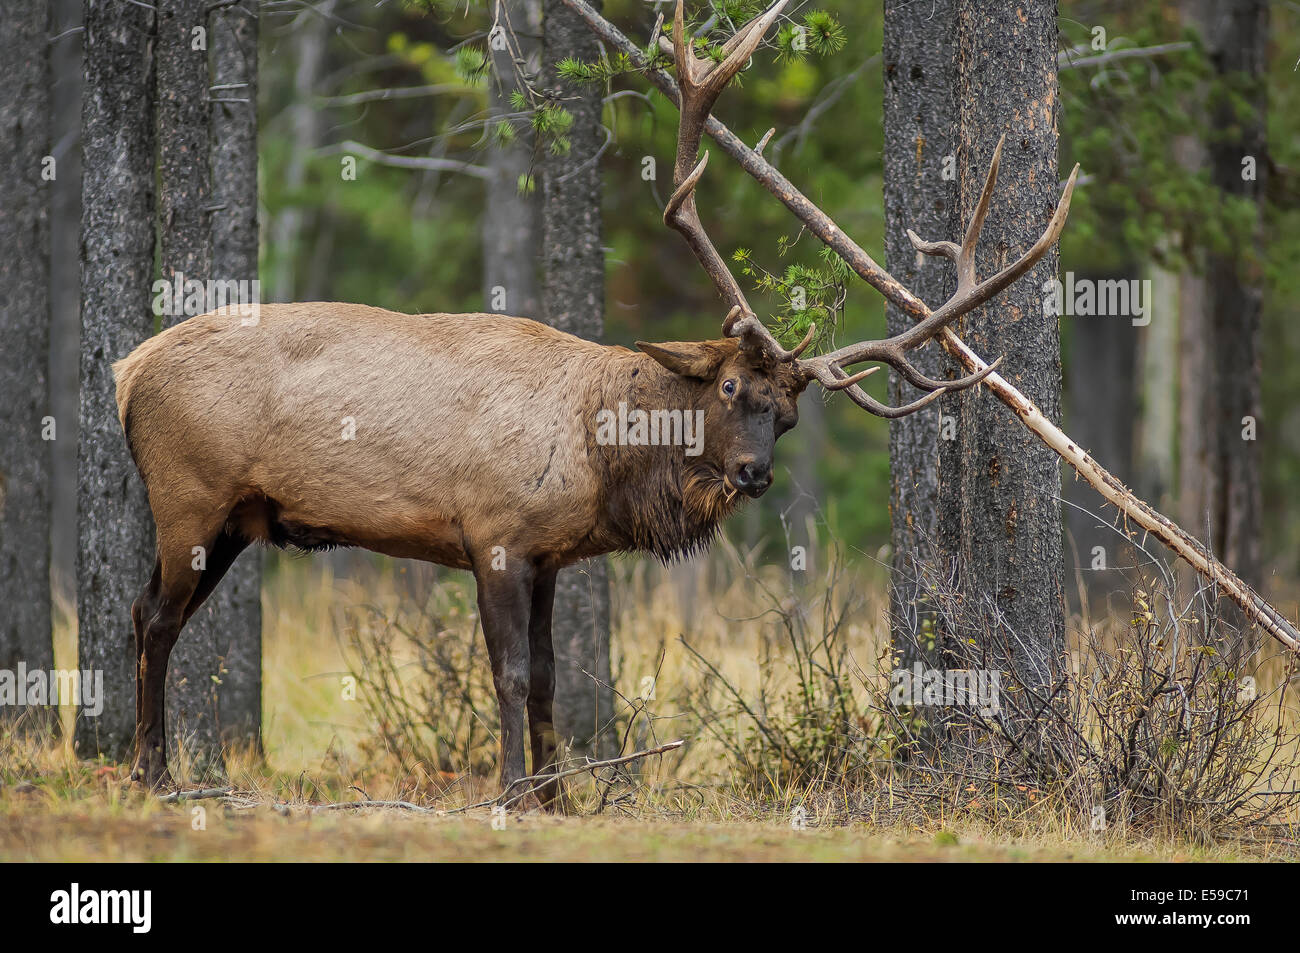 Bull Elk (Cervus elaphus). Mature bull thrasing a small tree during the mating season. Jasper National Park, Alberta, Canada. Stock Photo